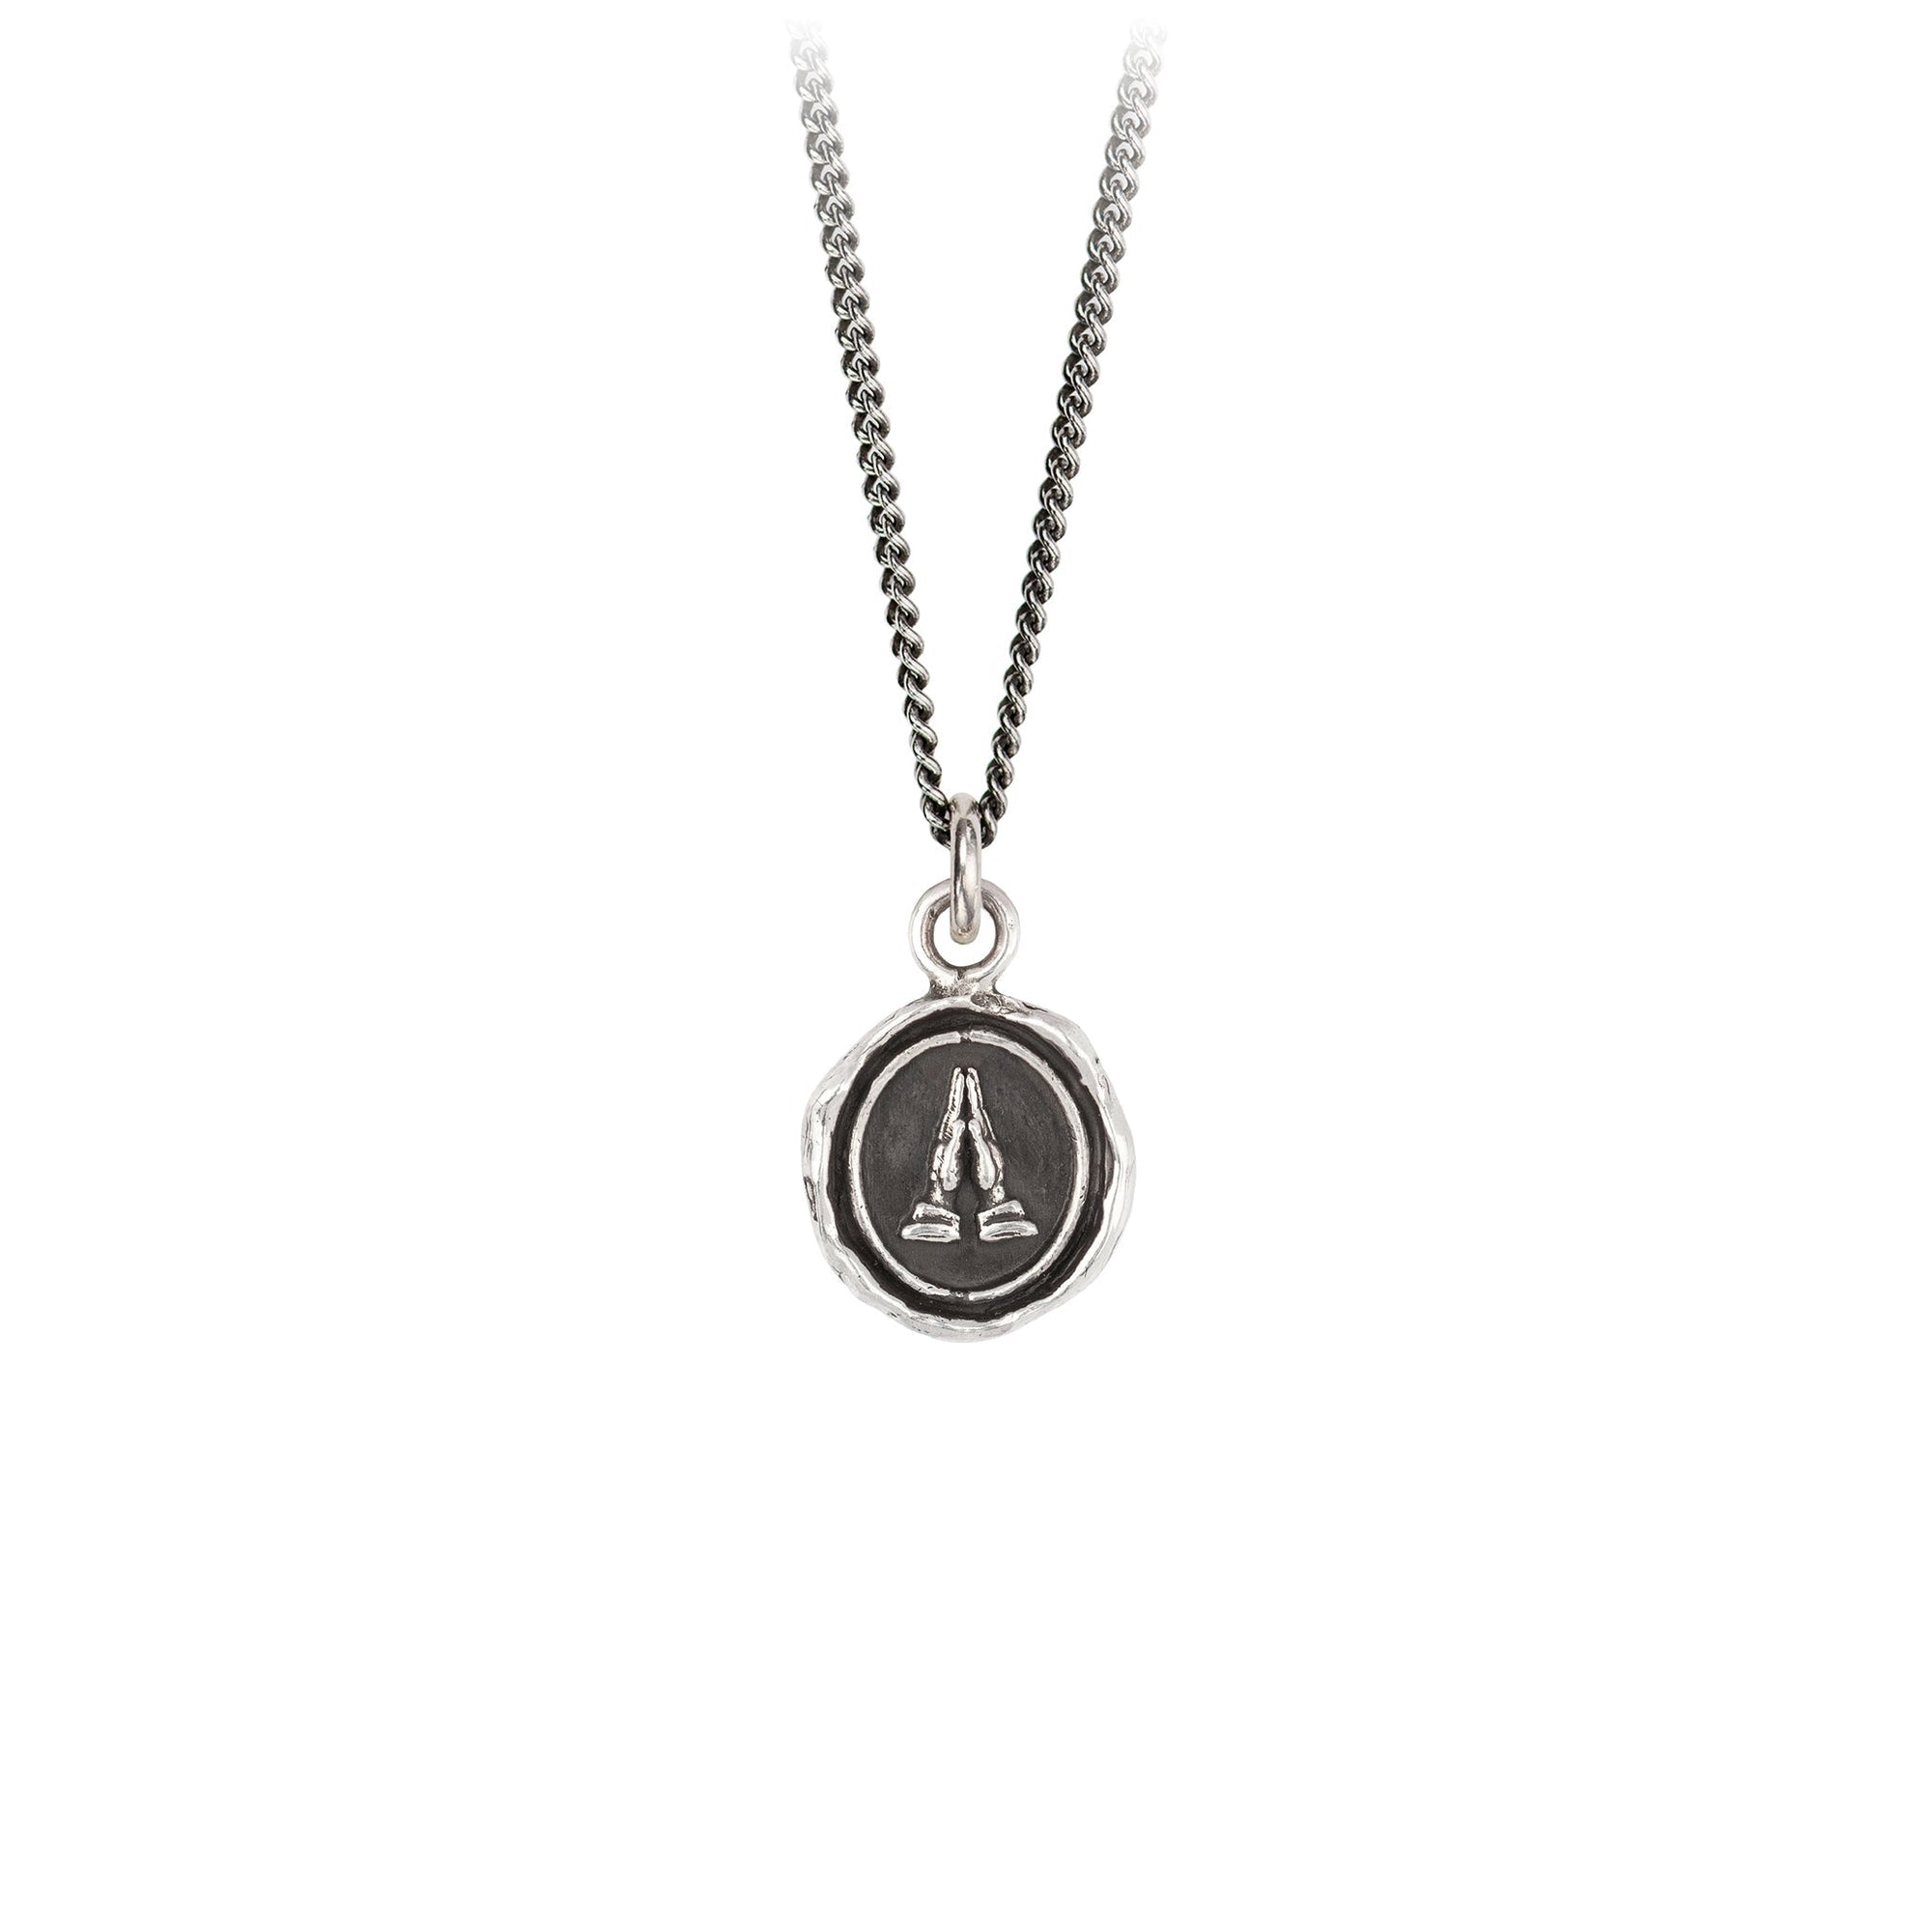 A Oxidized Silver Grateful talisman on a silver chain.